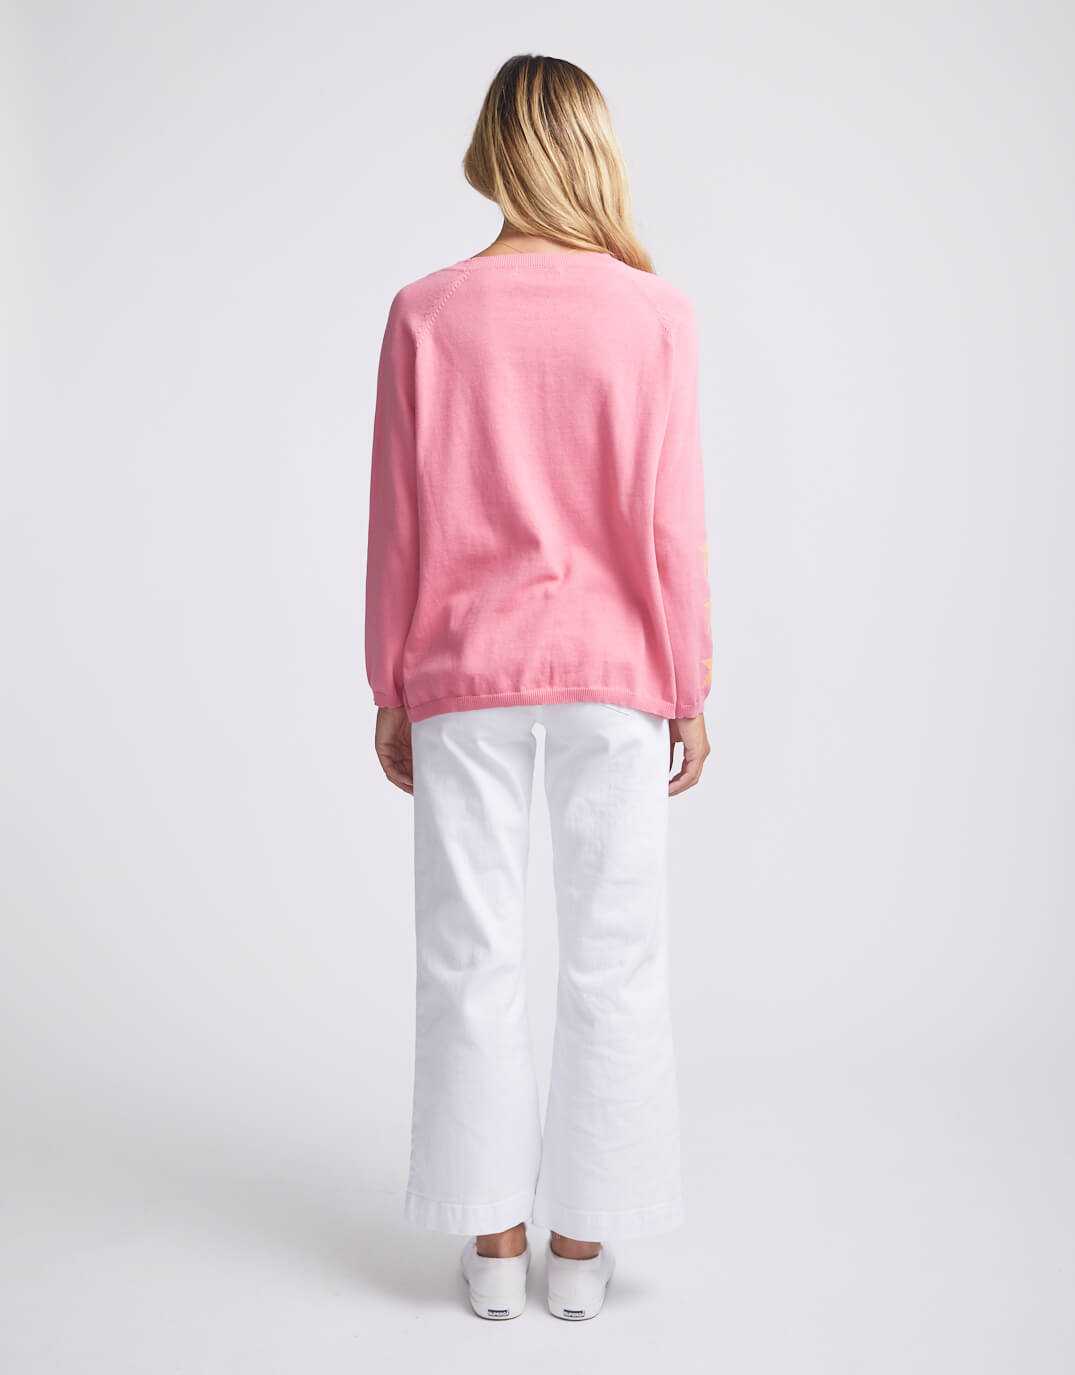 haven-weekender-knit-star-jumper-pink-sorbet-womens-clothing